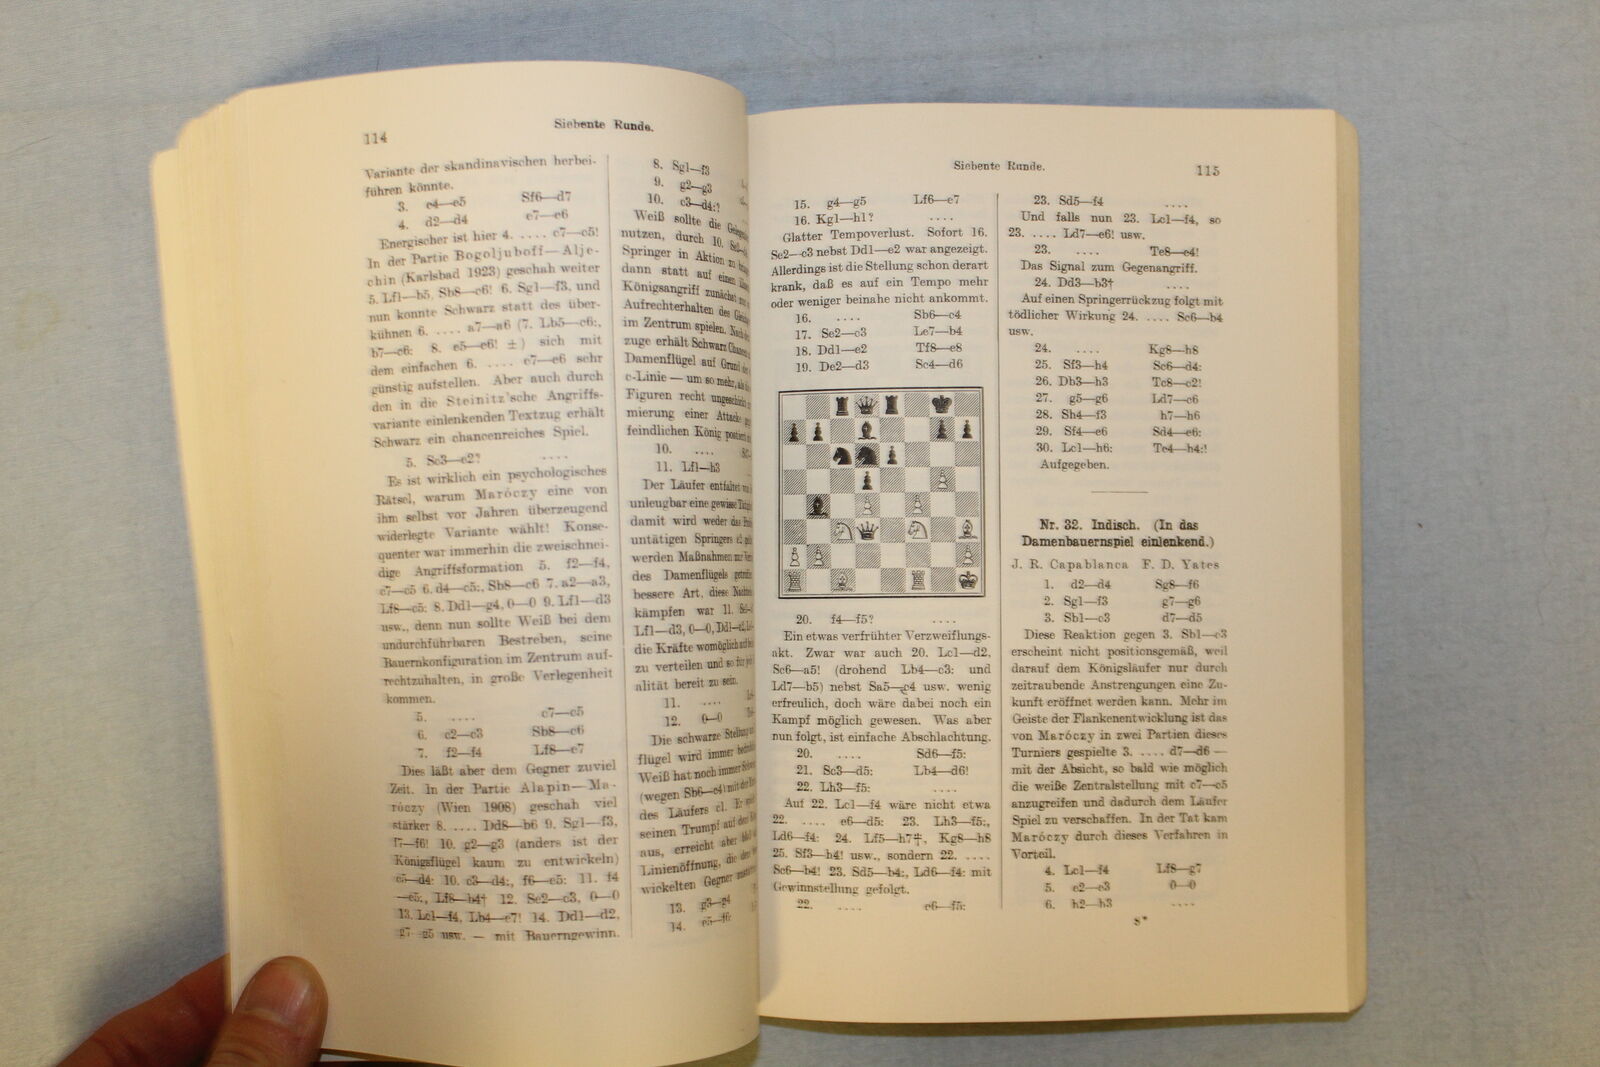 11316.German chess book:.A Aljechin. Grand Master tournament in New York in 1924. 1963